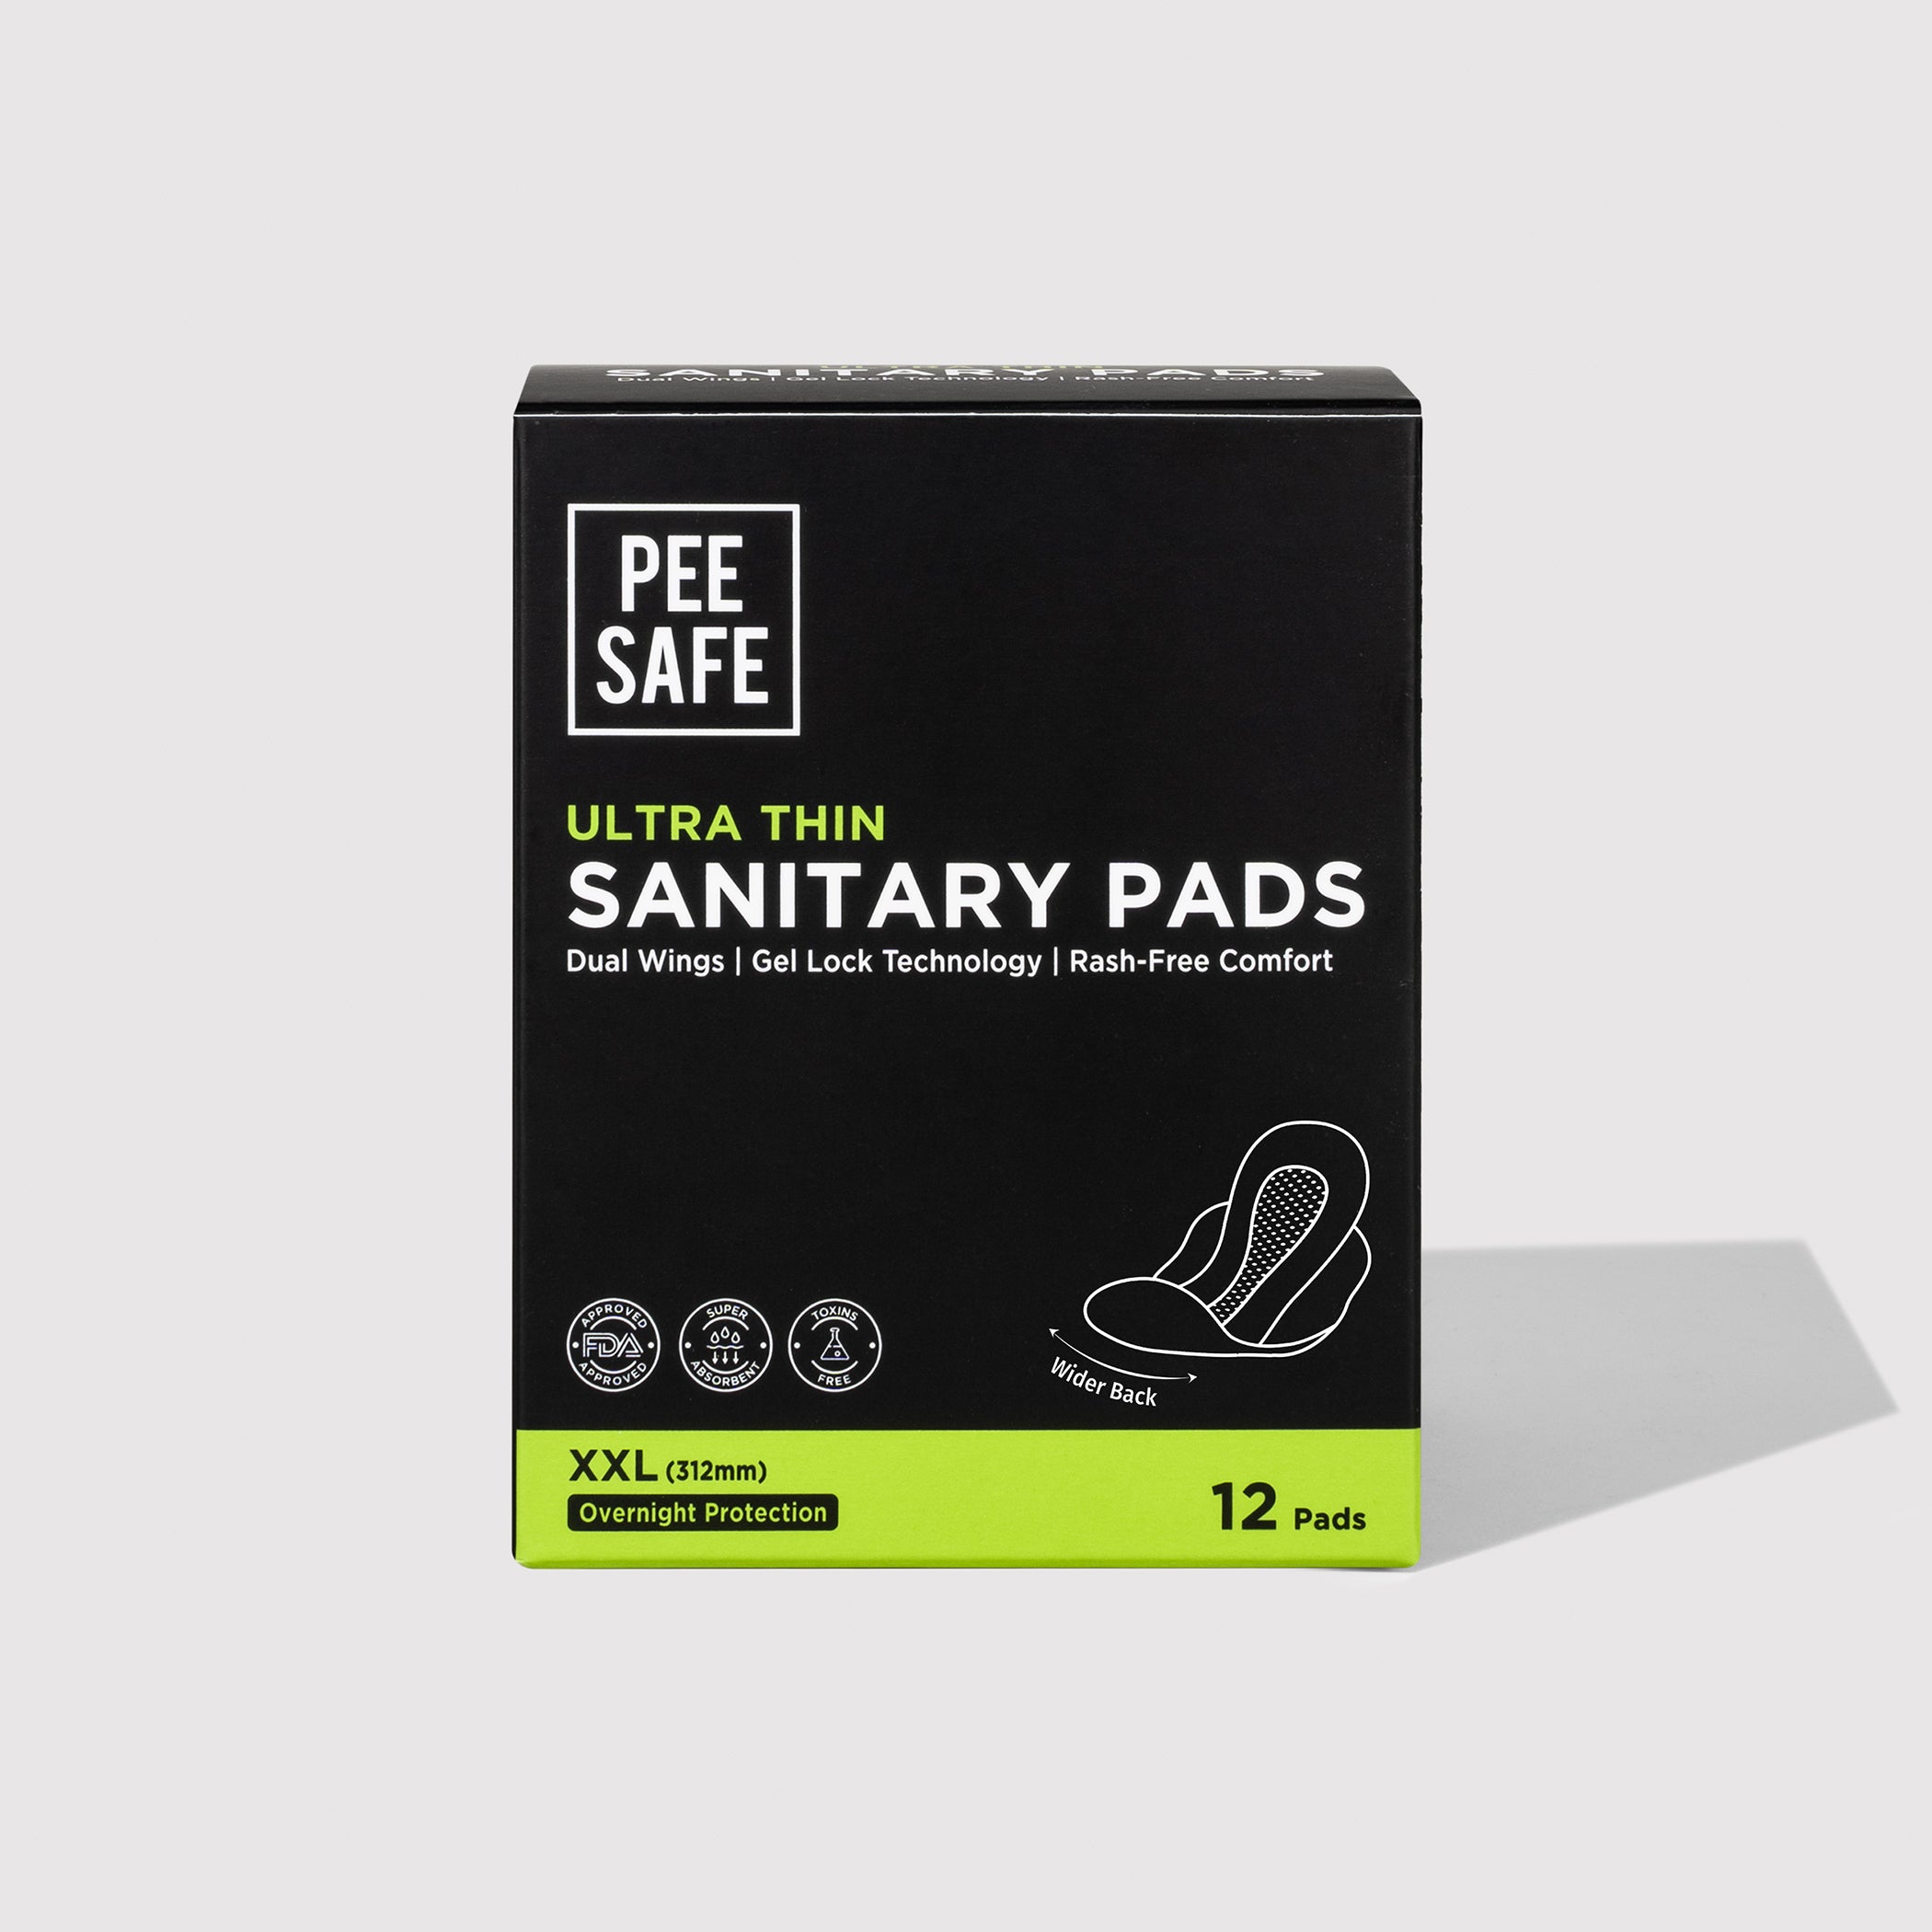 Pee Safe Ultra Thin Sanitary Pads - XXL (12 Pads)